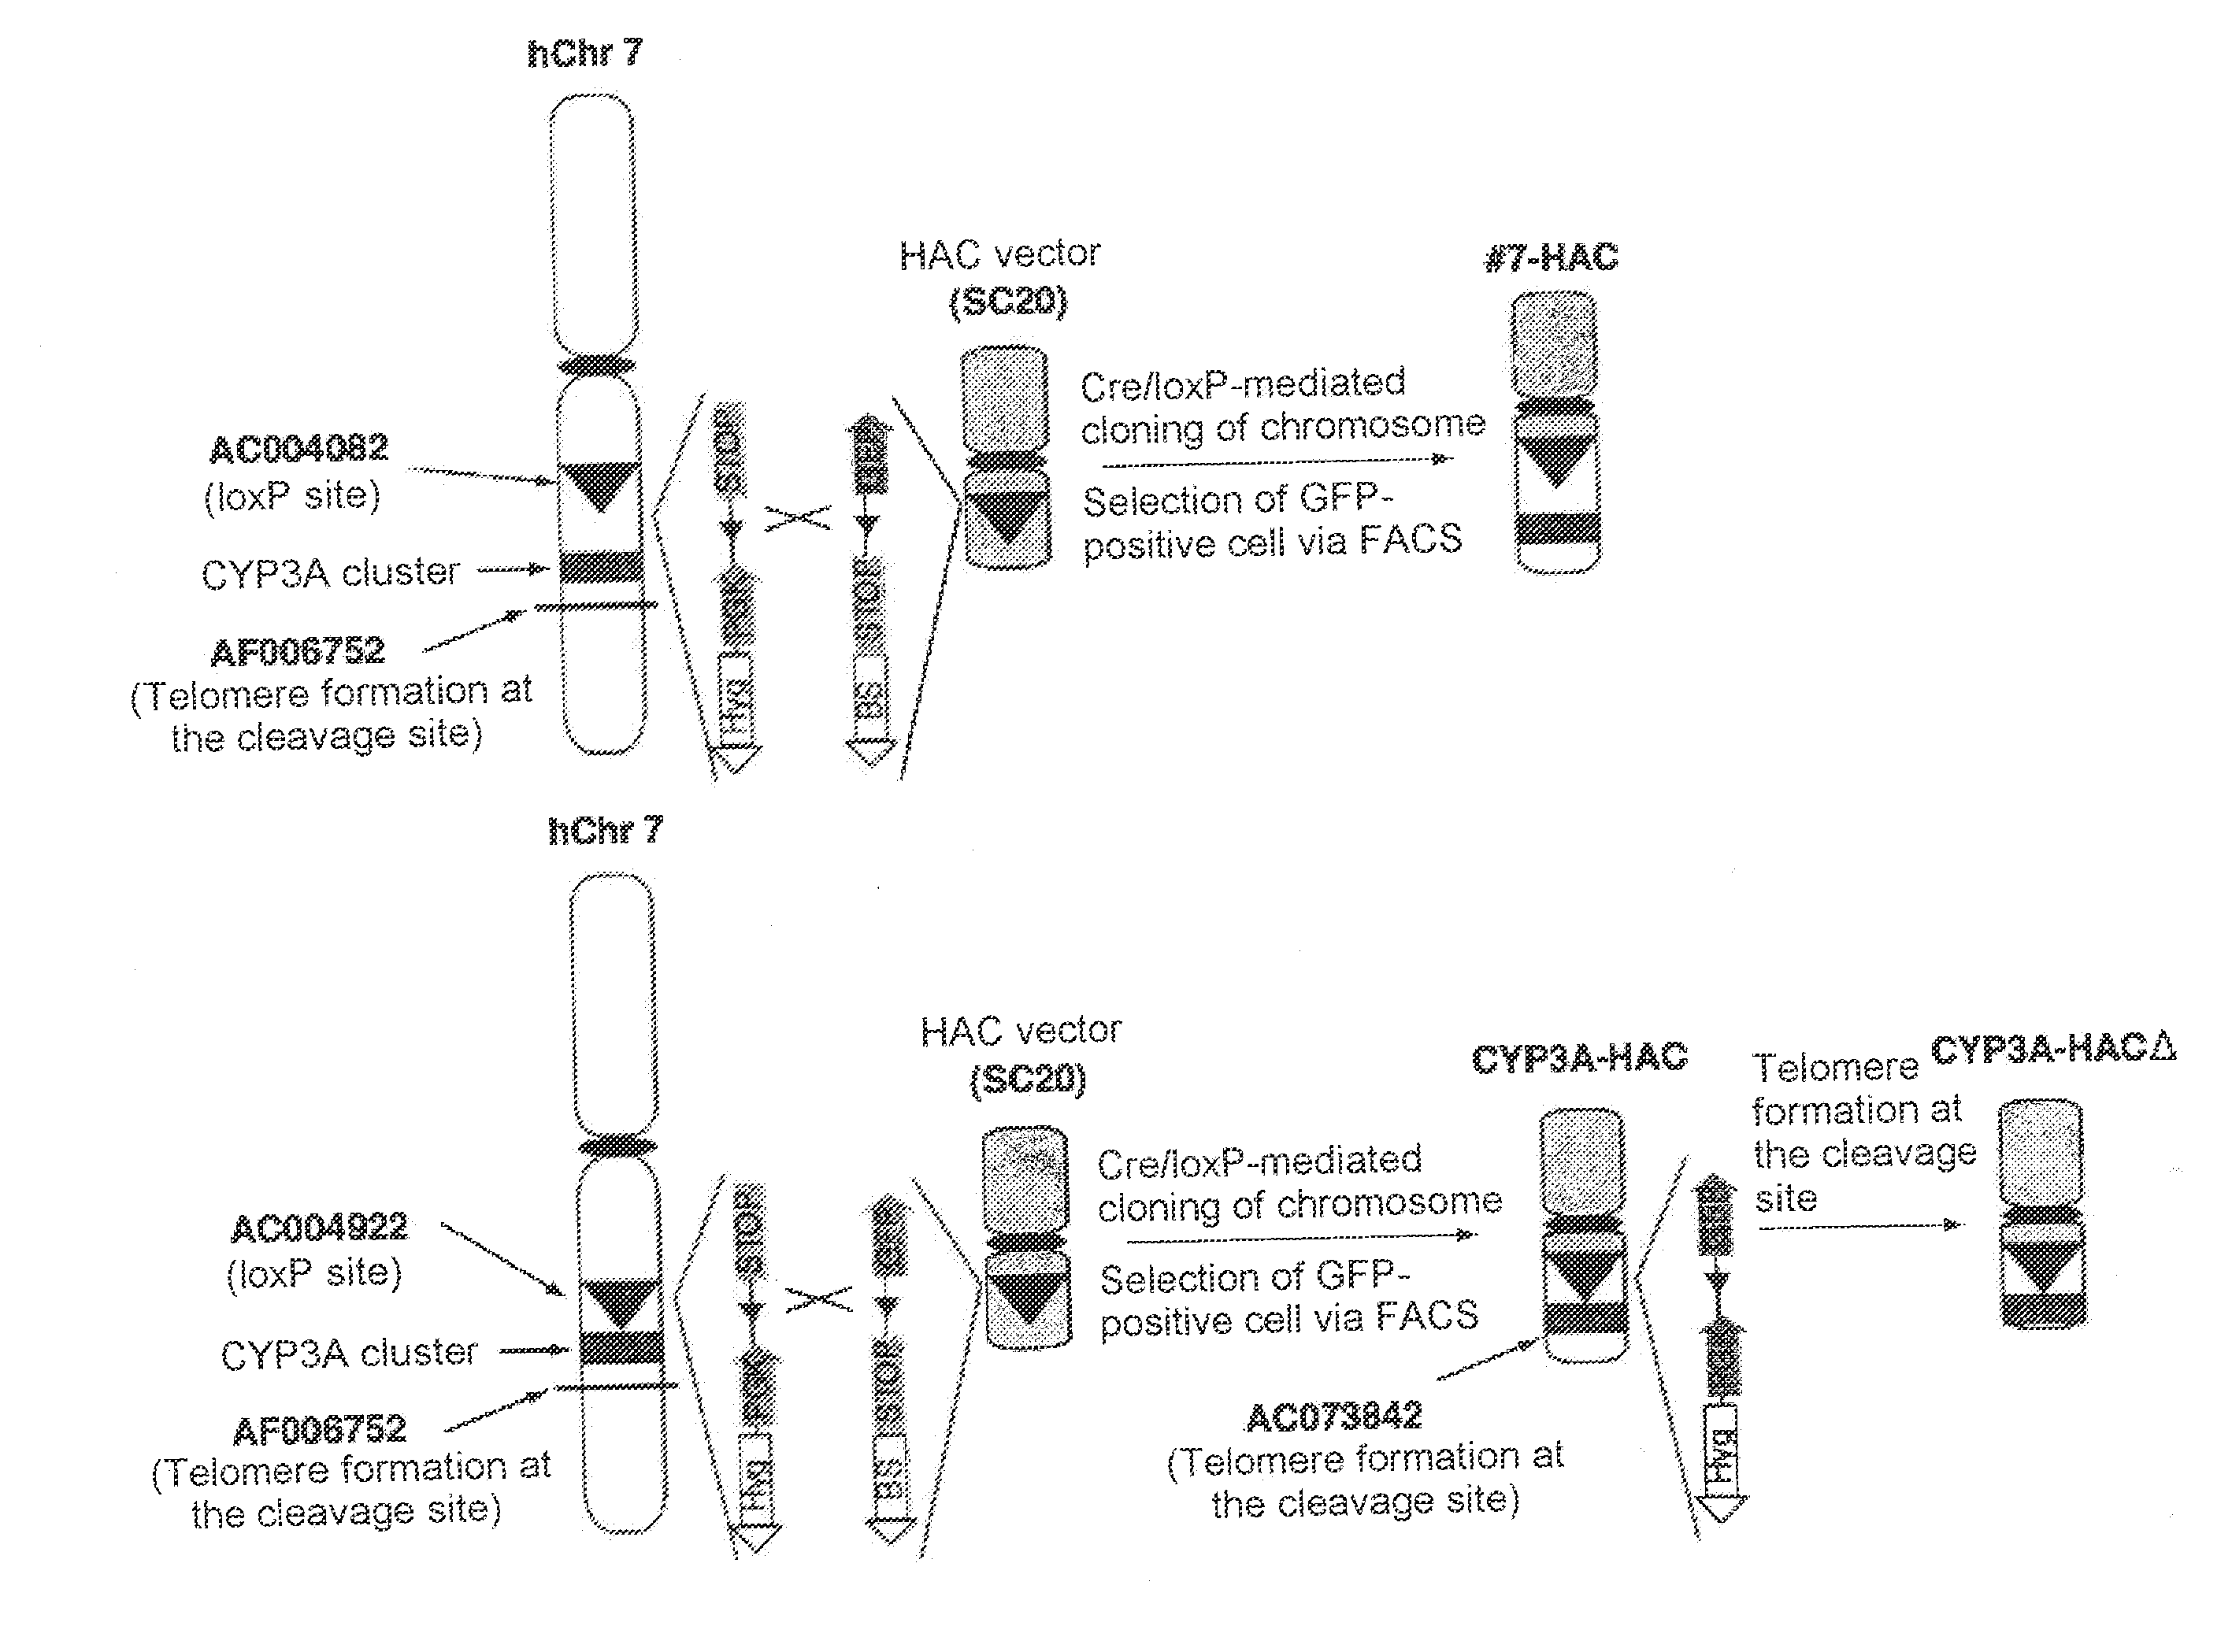 Mammalian artificial chromosome vector comprising human cytochrome p450 gene (cluster) and non-human mammalian animal retaining the same